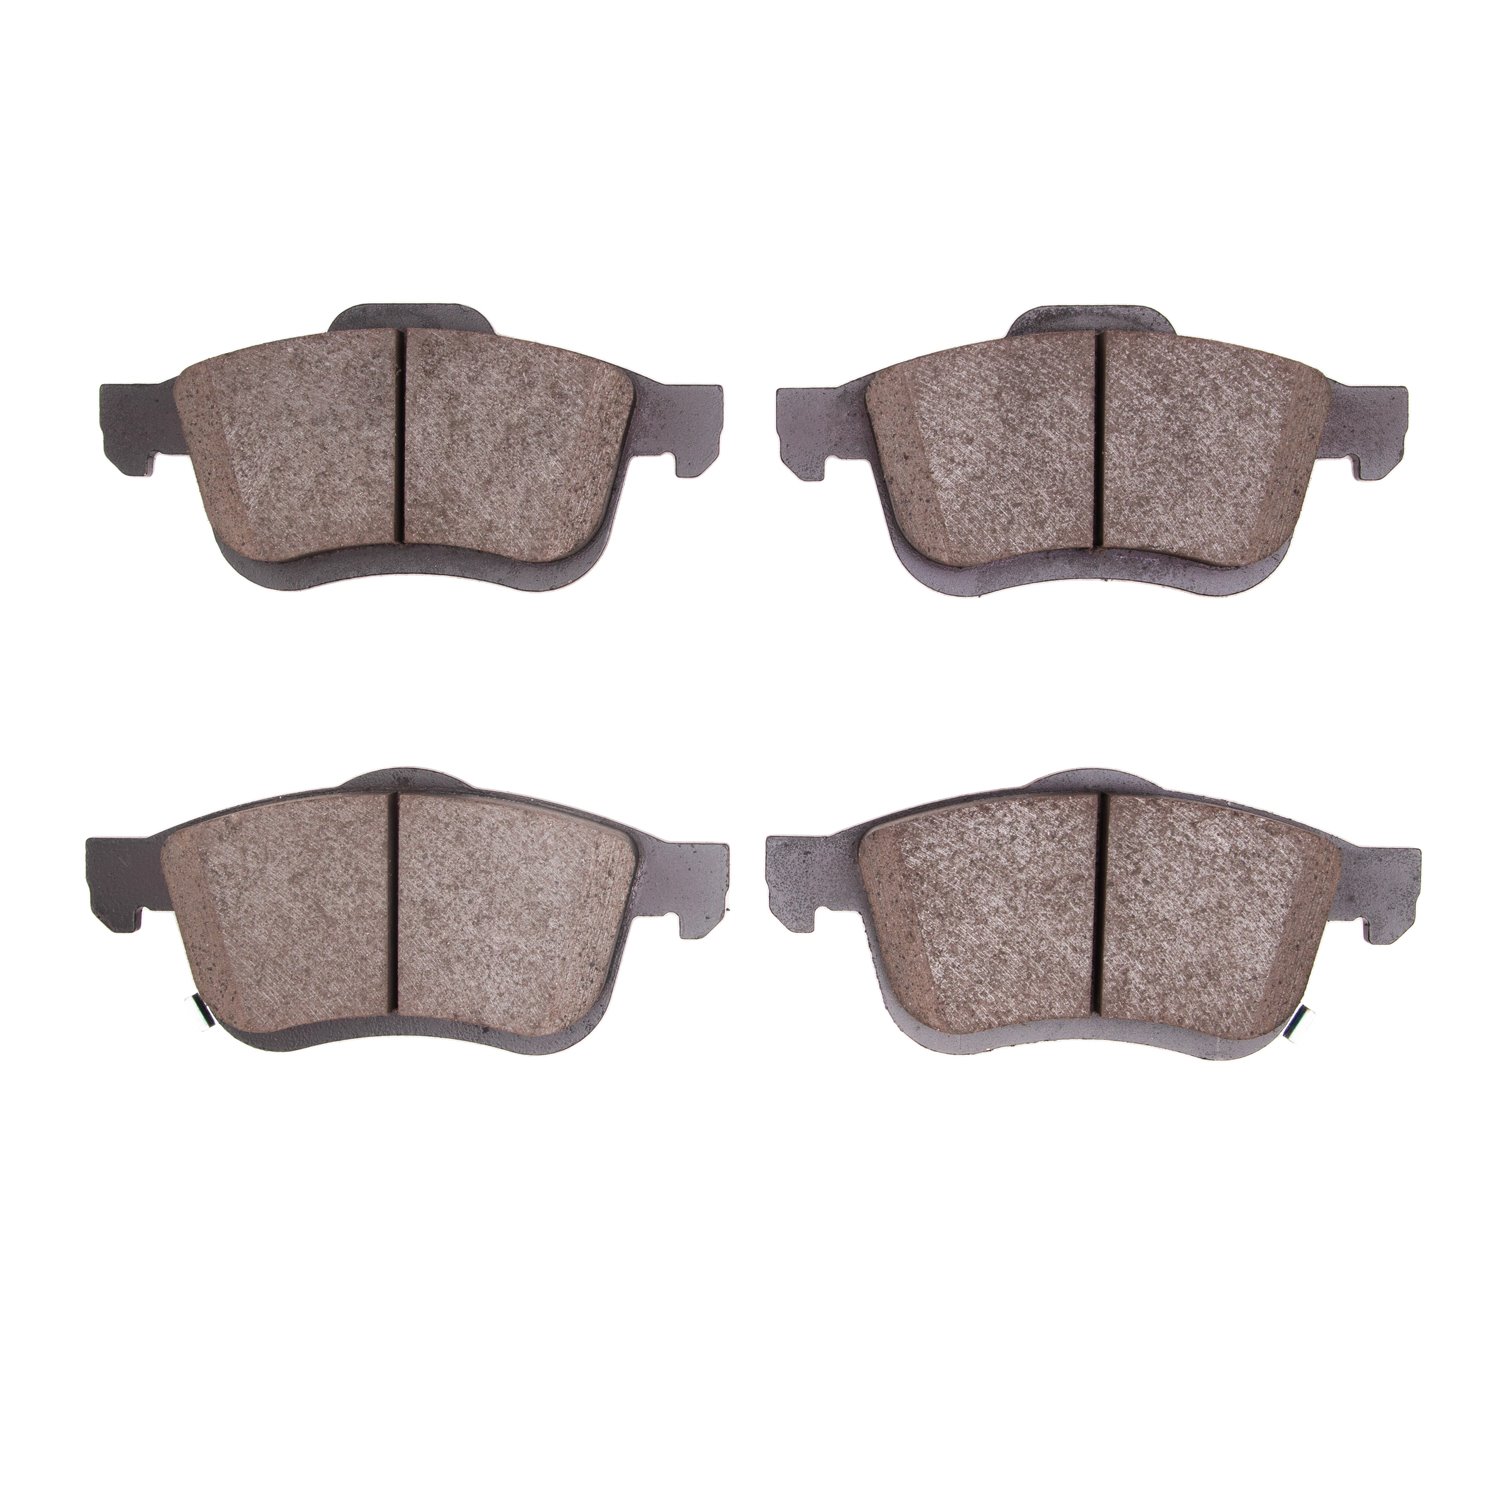 1310-1721-00 3000-Series Ceramic Brake Pads, 2014-2019 Mopar, Position: Front